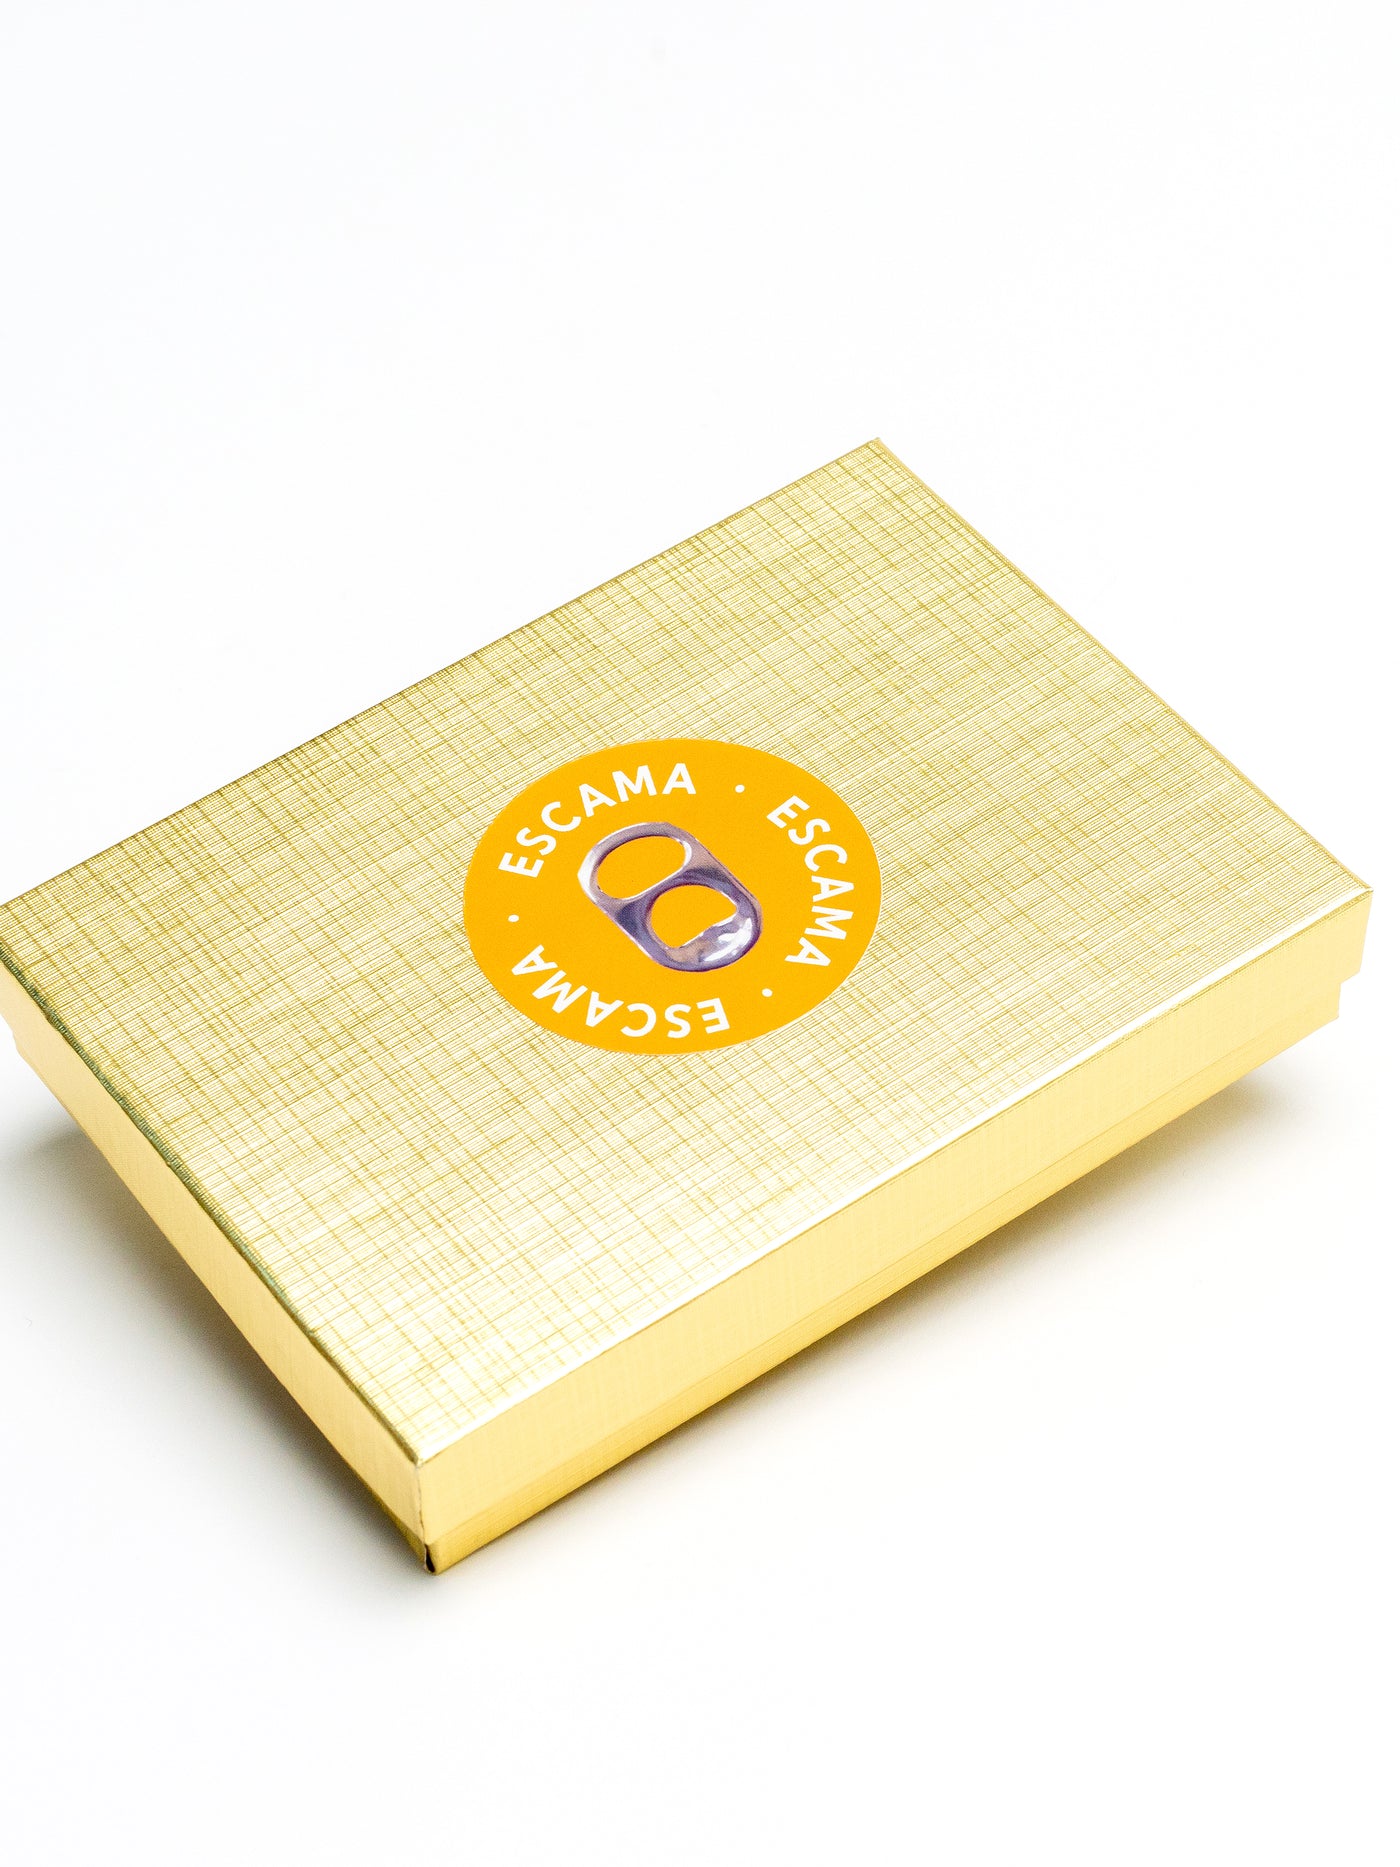 alt="gift box for soda tab necklace - escama studio"